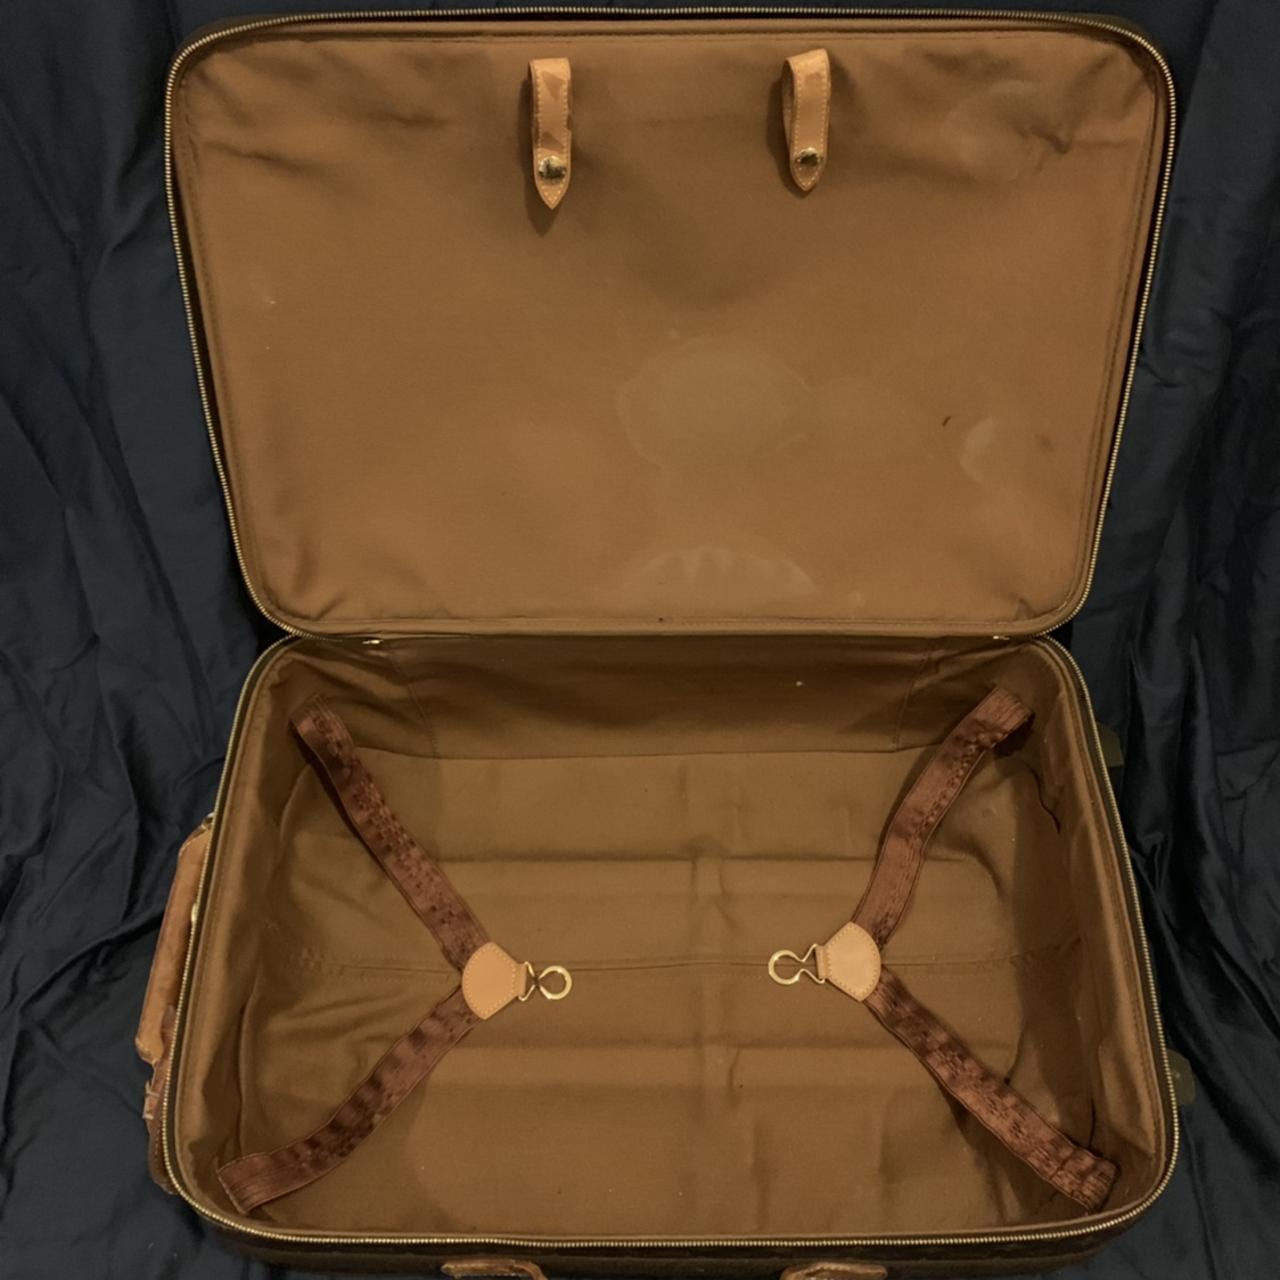 File:Berlin- Louis Vuitton luggage suitcase set - 4360.jpg